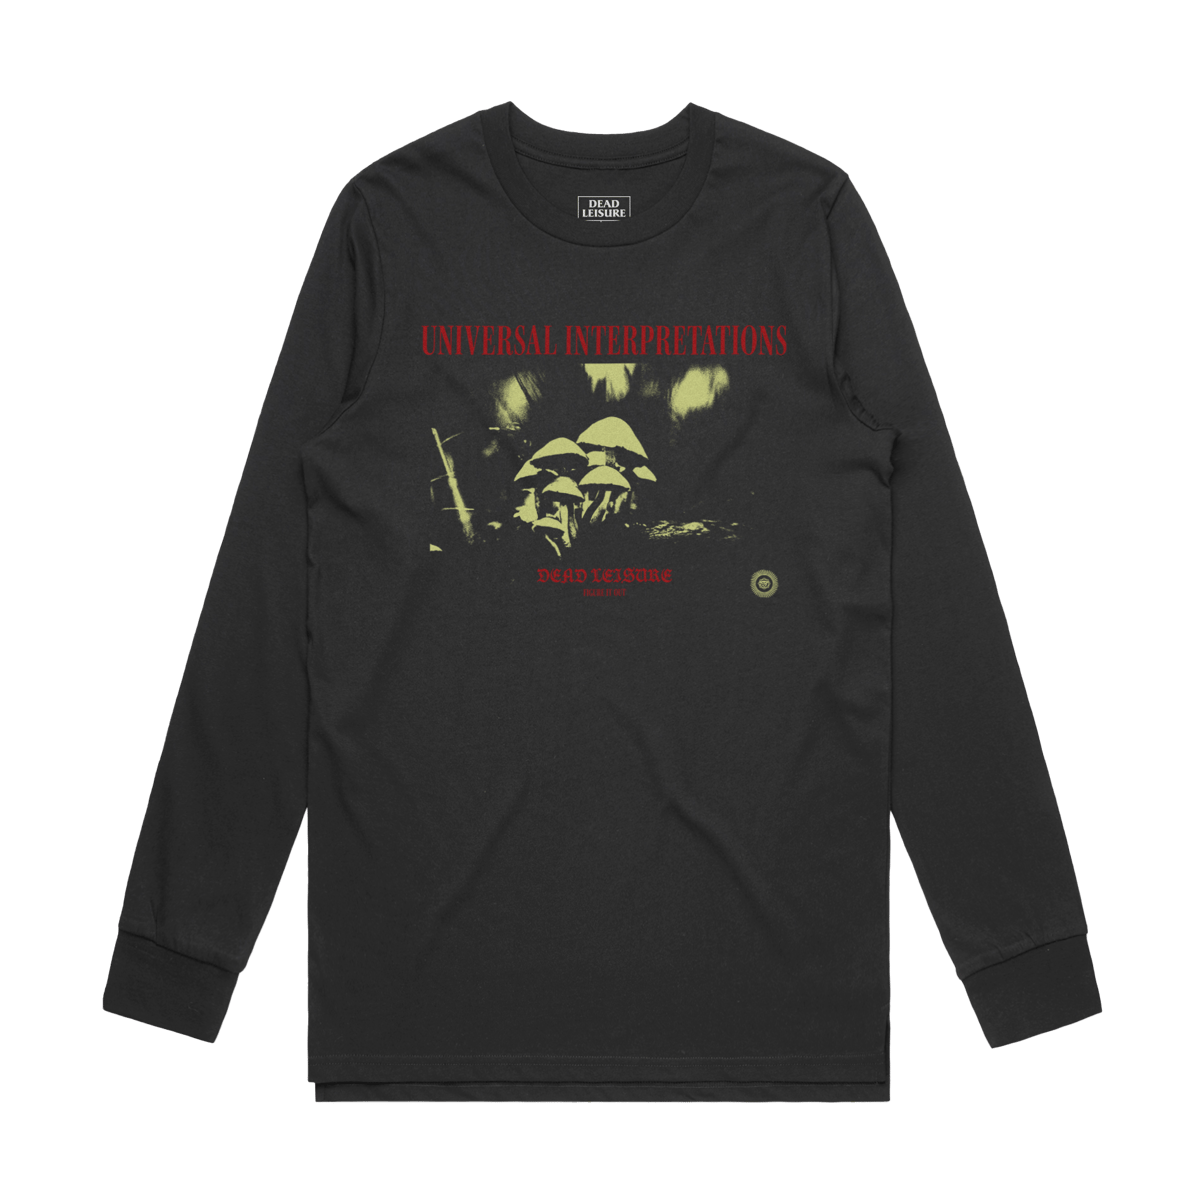 Universal Interpretations Long Sleeve T-shirt - Coal